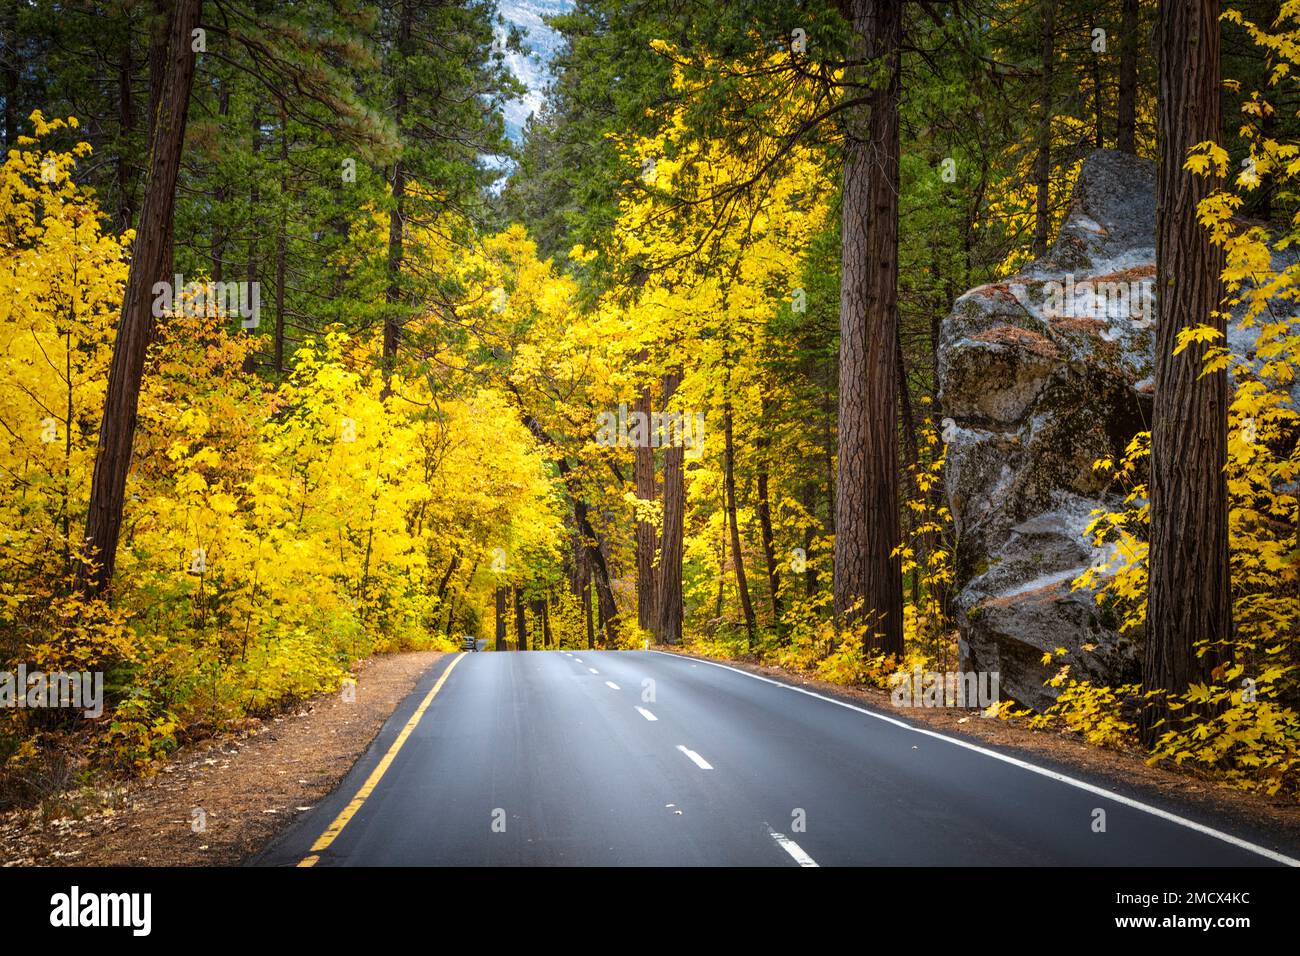 The Yosemite Valley loop road. Yosemite National Park, California. Stock Photo